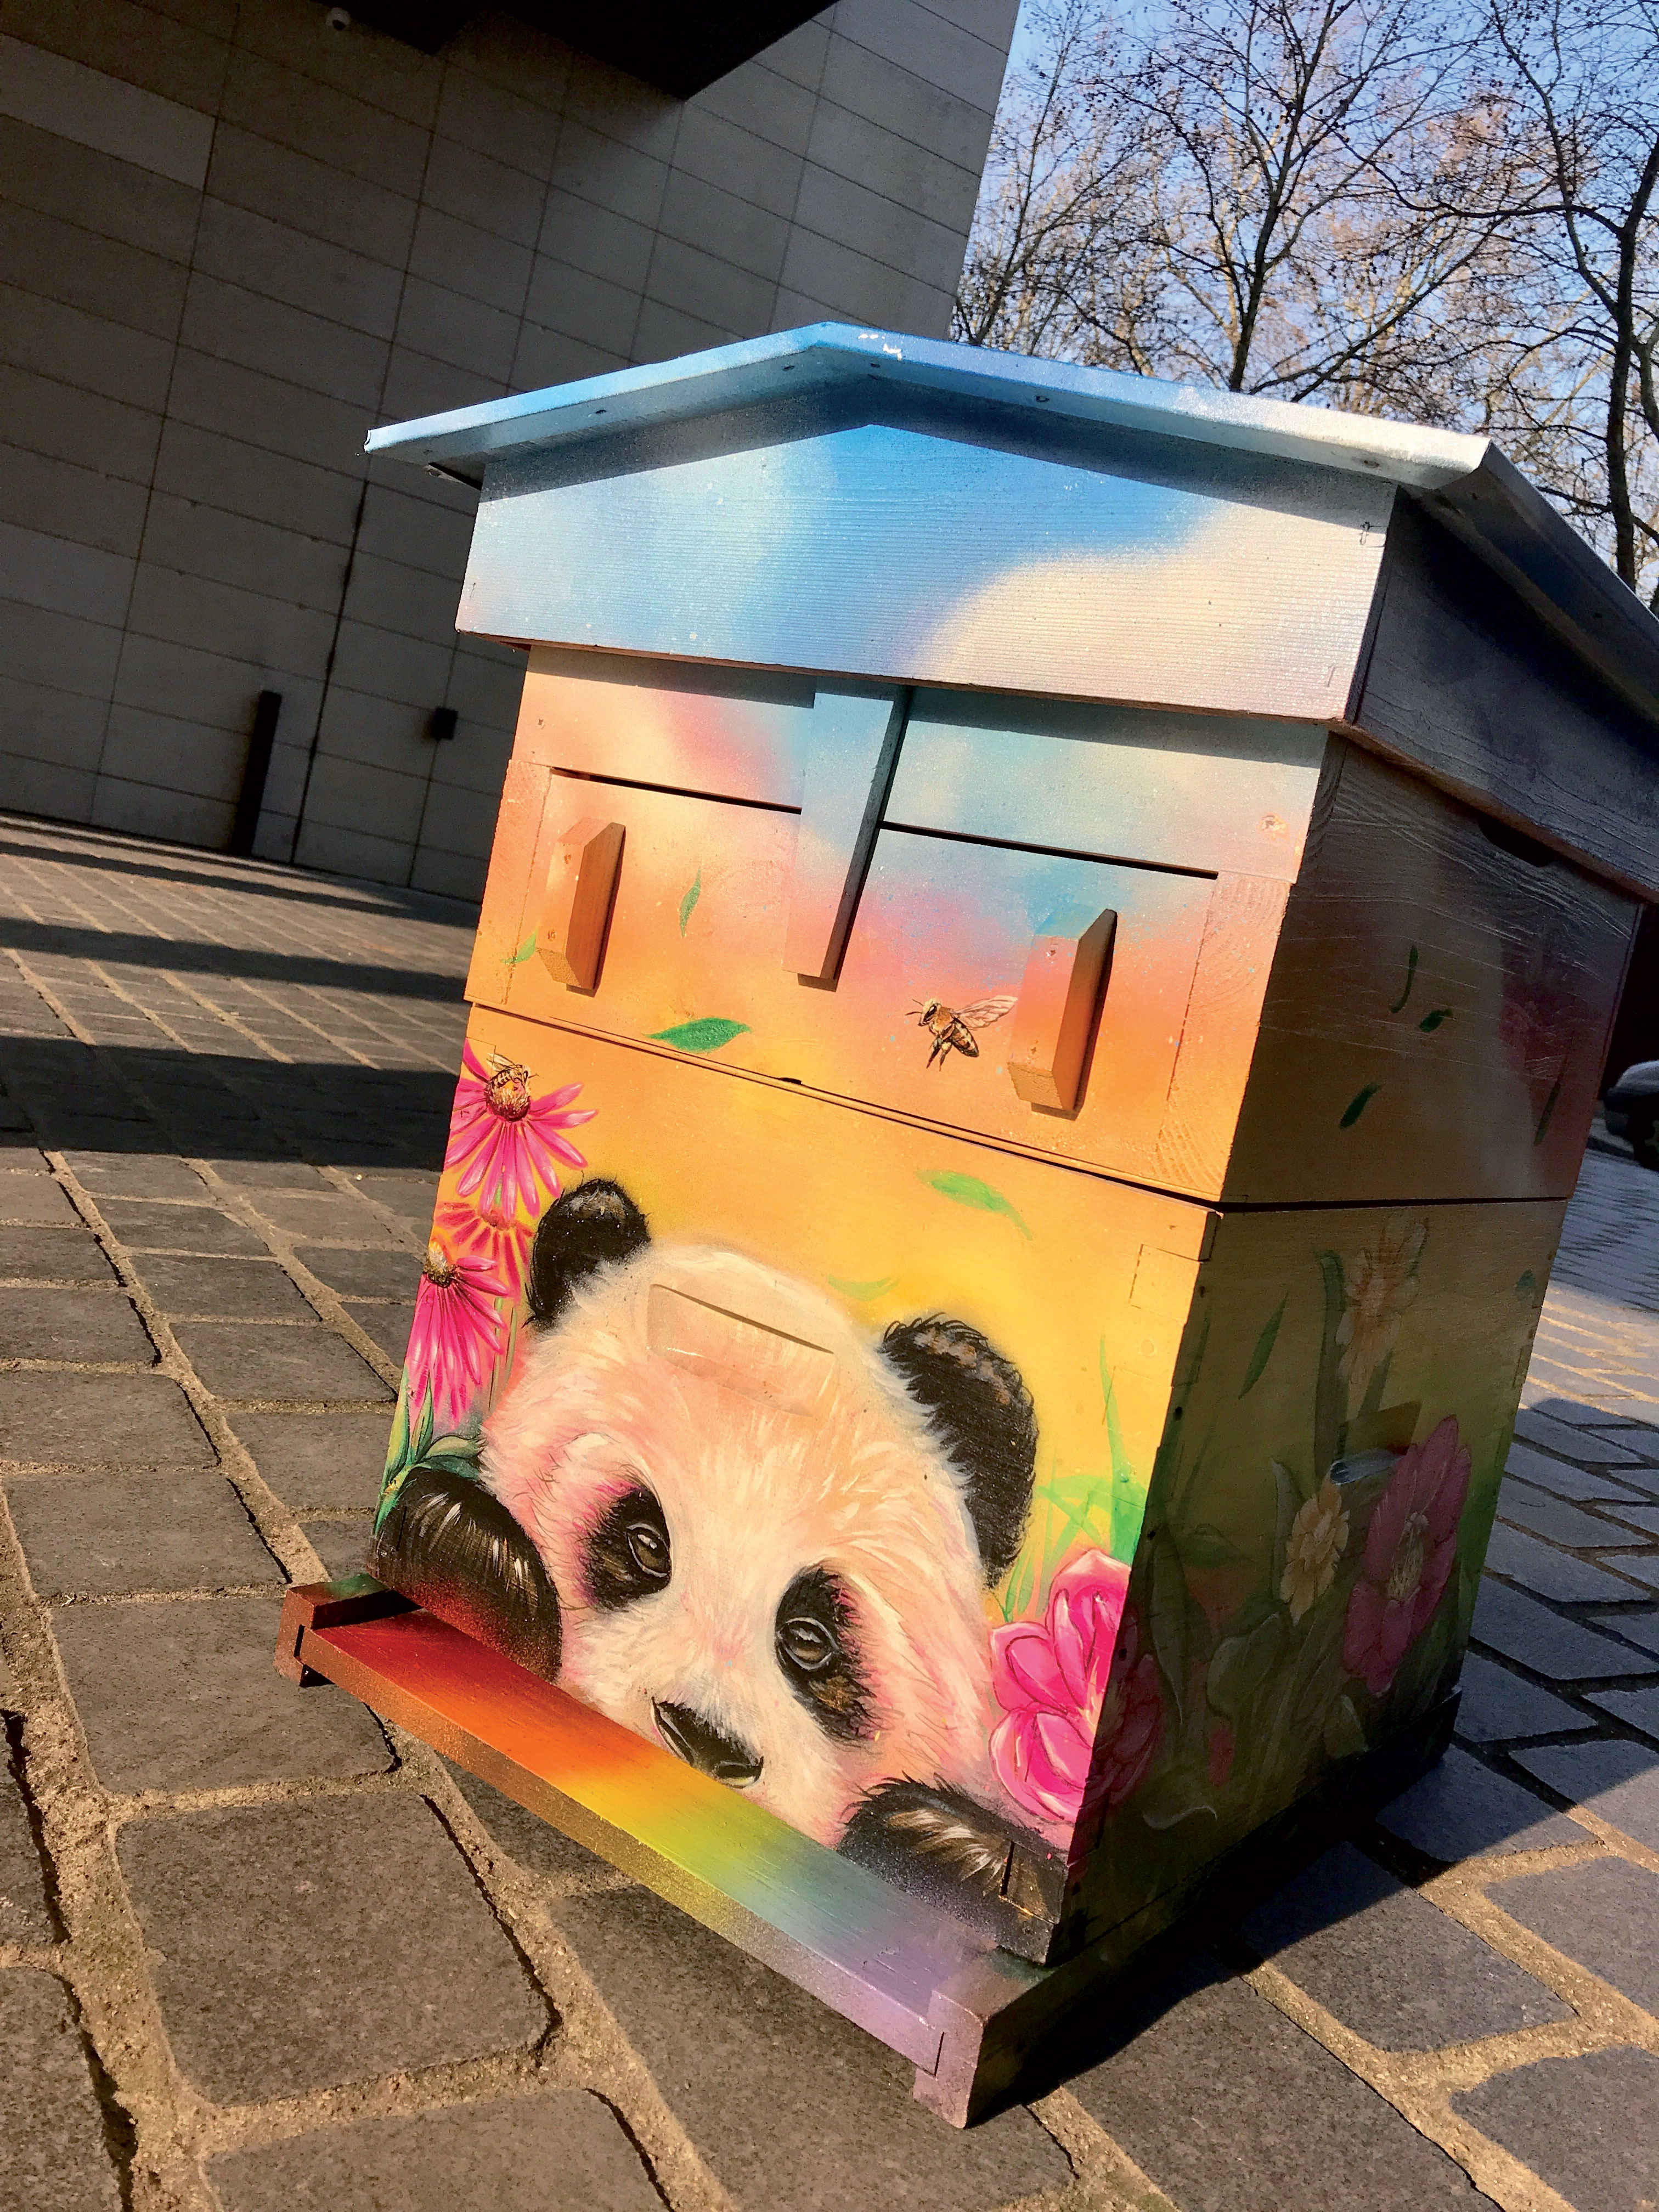 Urban beekeeping: street art and biodiversity